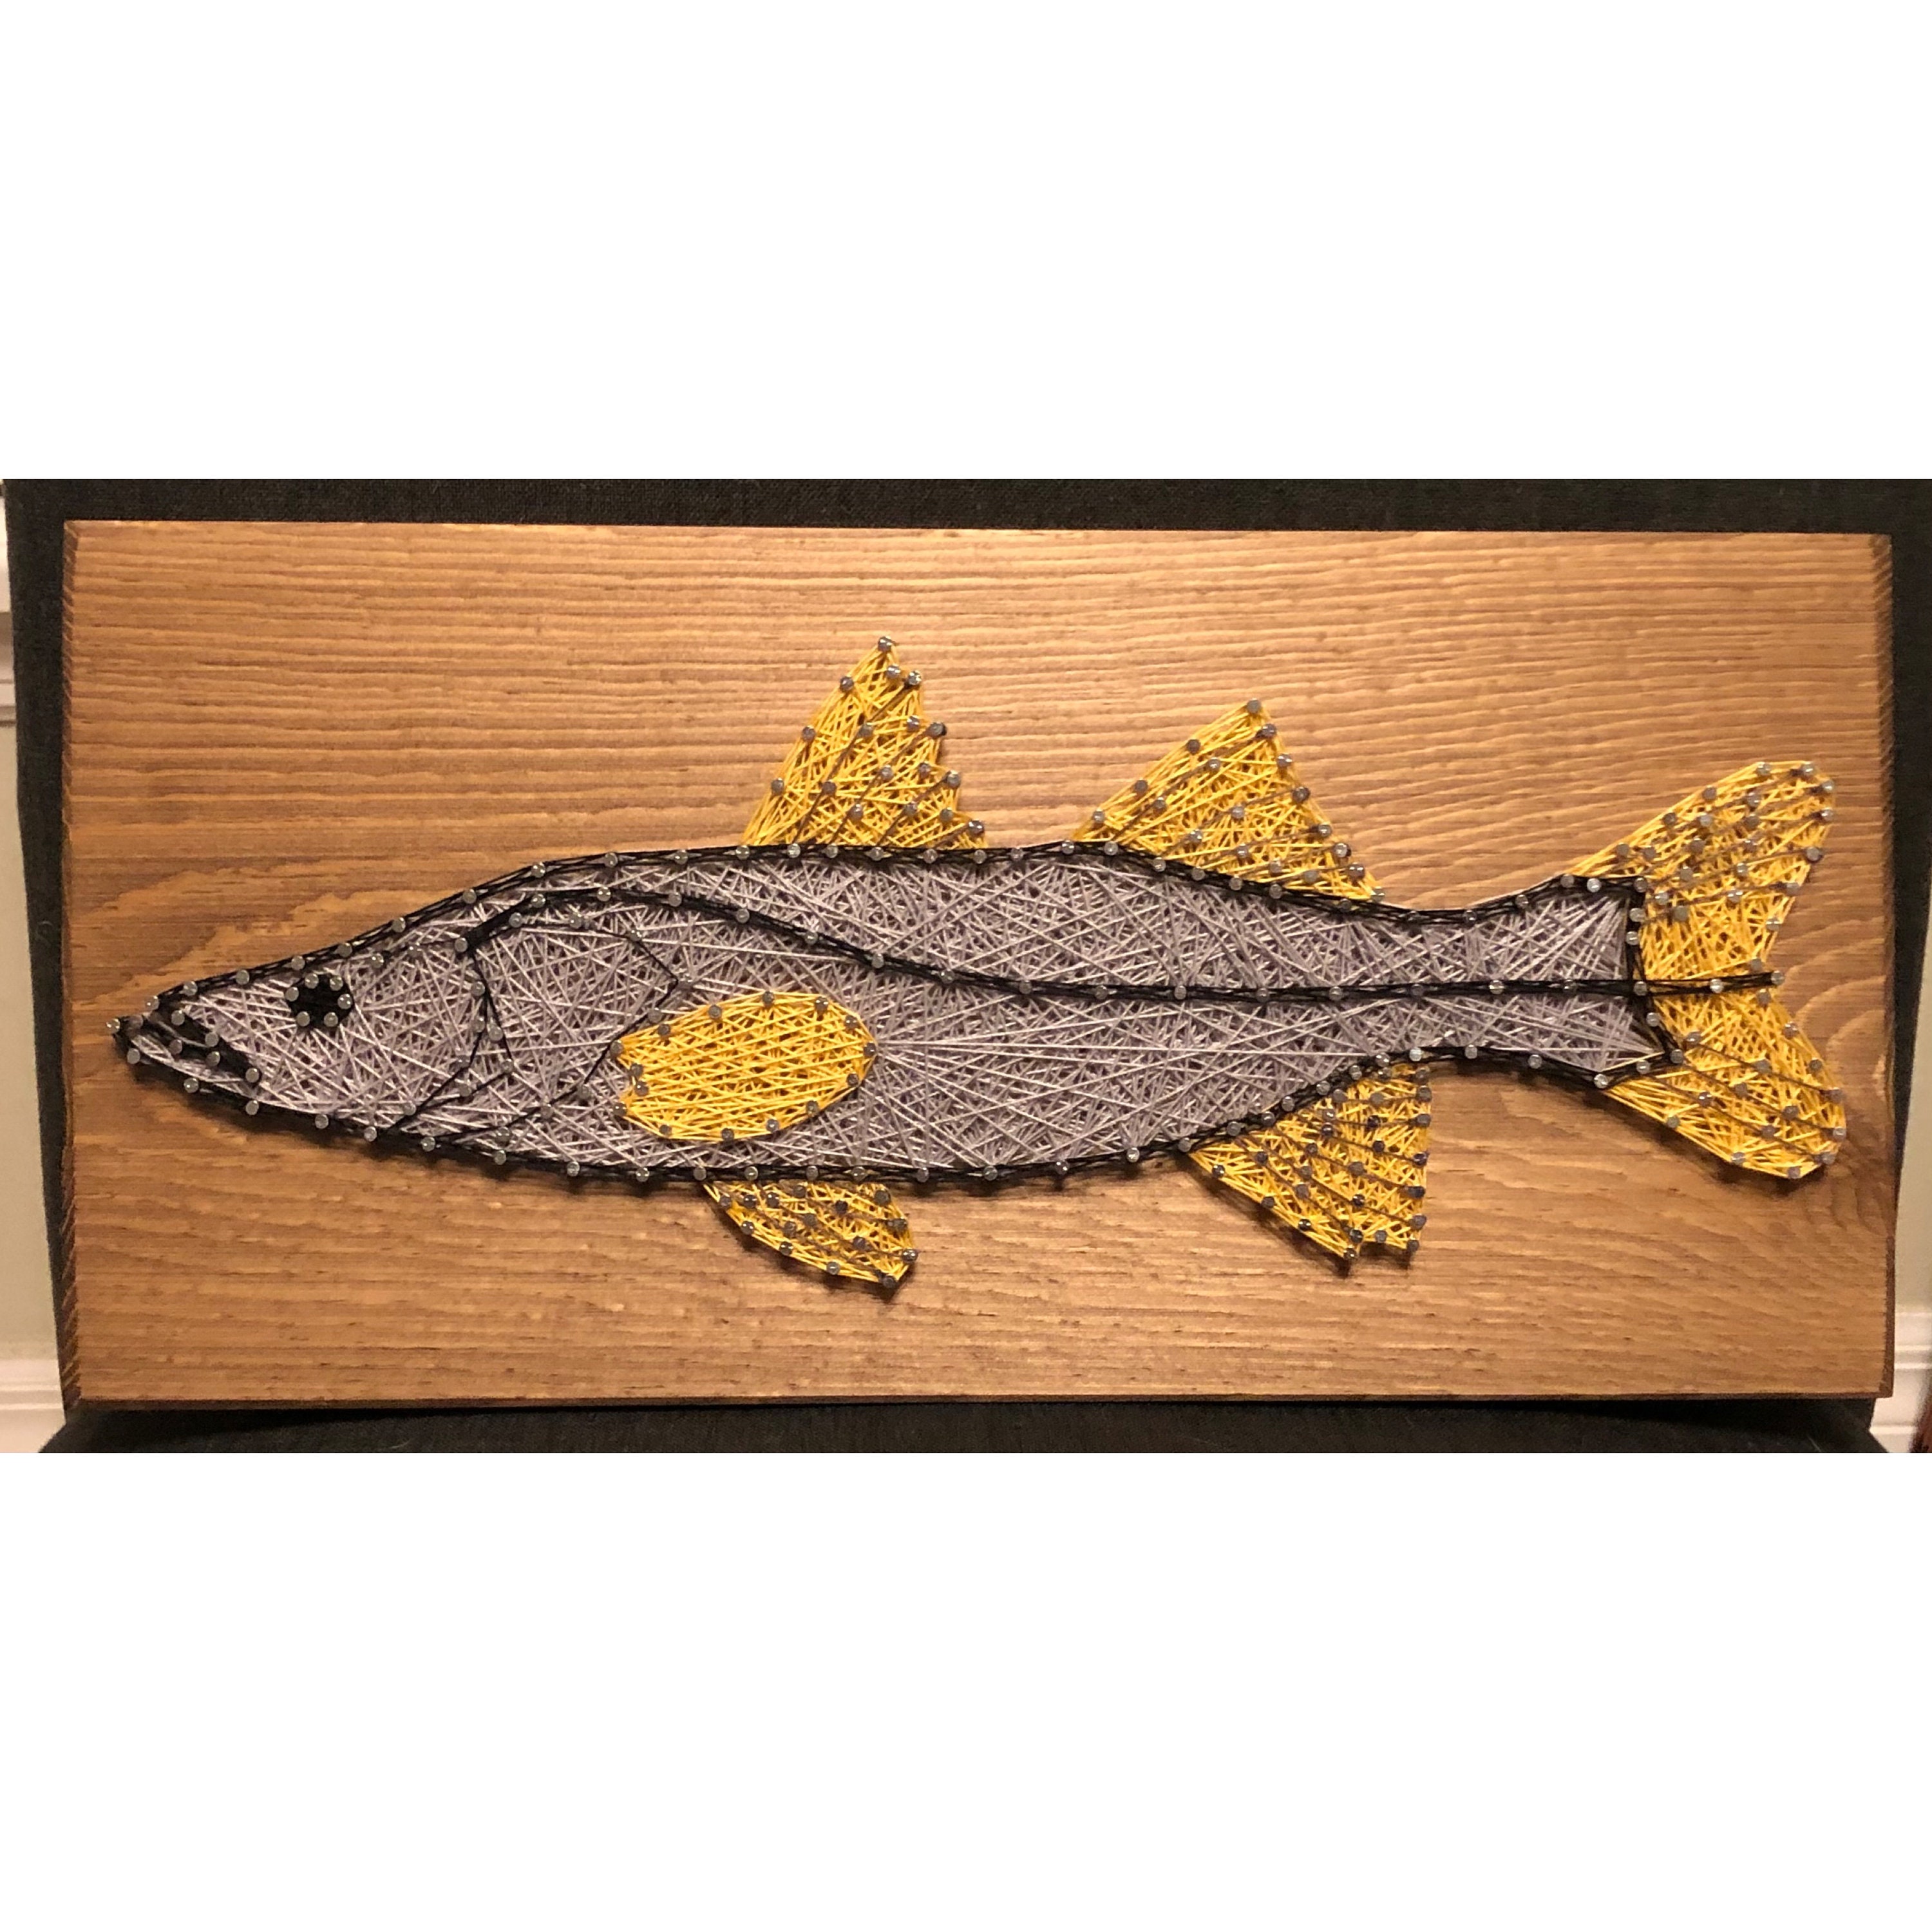 Made to Order Snook Fish String Art, Ocean Wall Decor, Wood Art